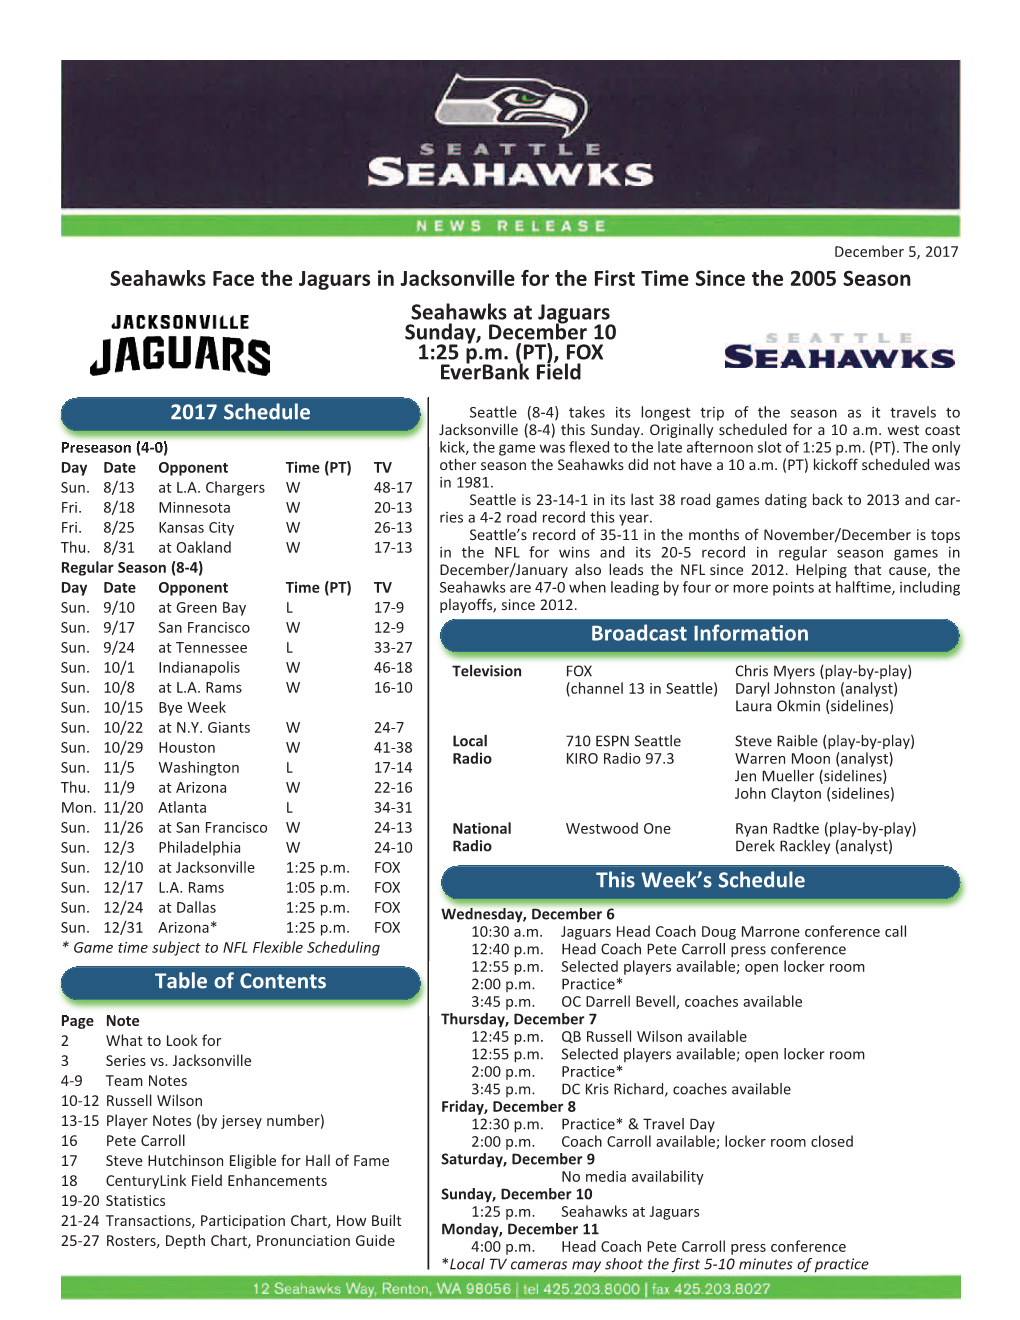 Seahawks at Jaguars Sunday, December 10 1:25 Pm (PT)